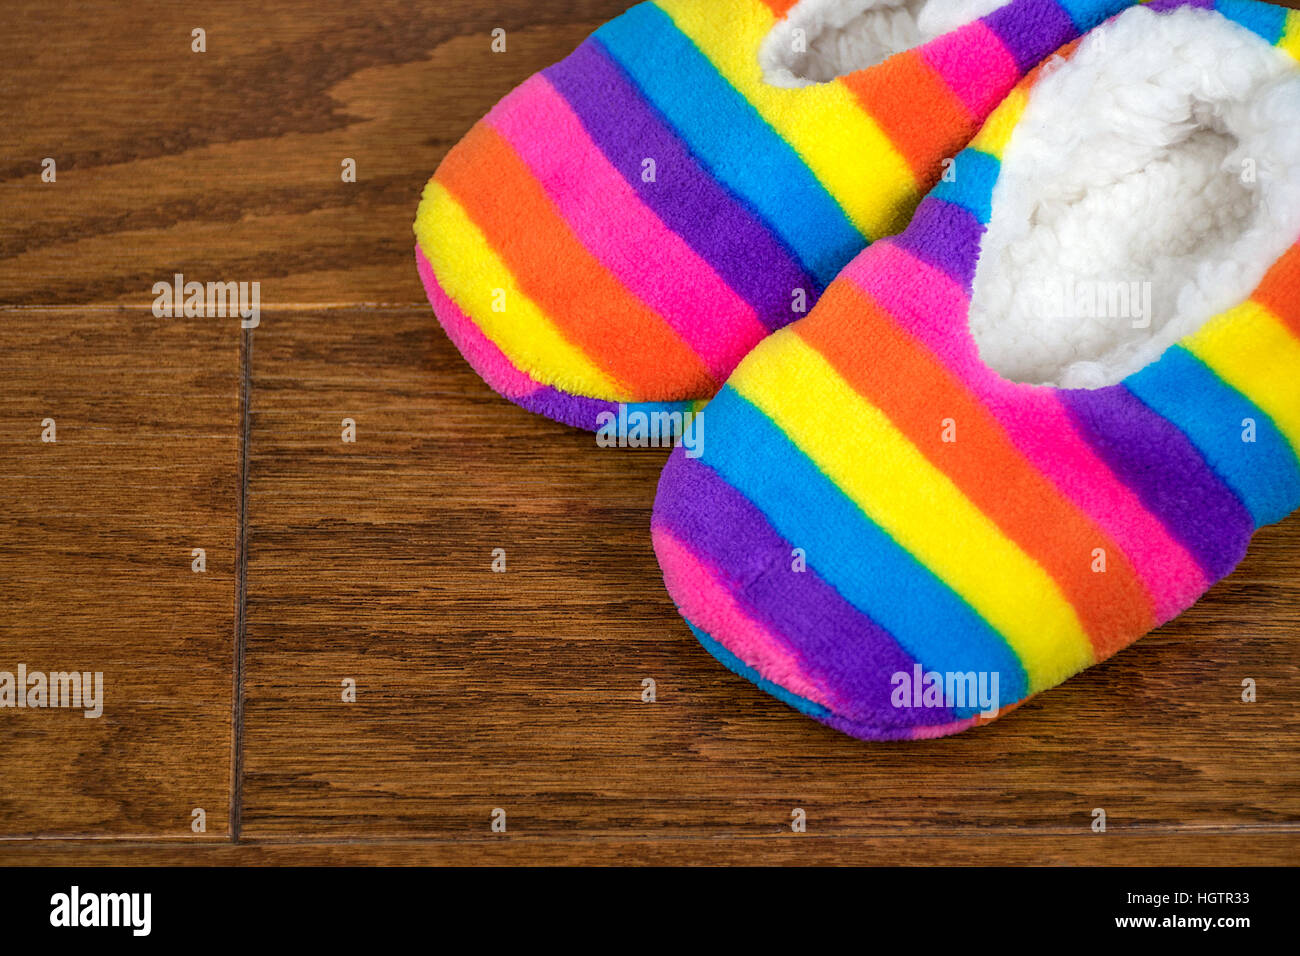 rainbow striped bedroom slippers on wood floor Stock Photo